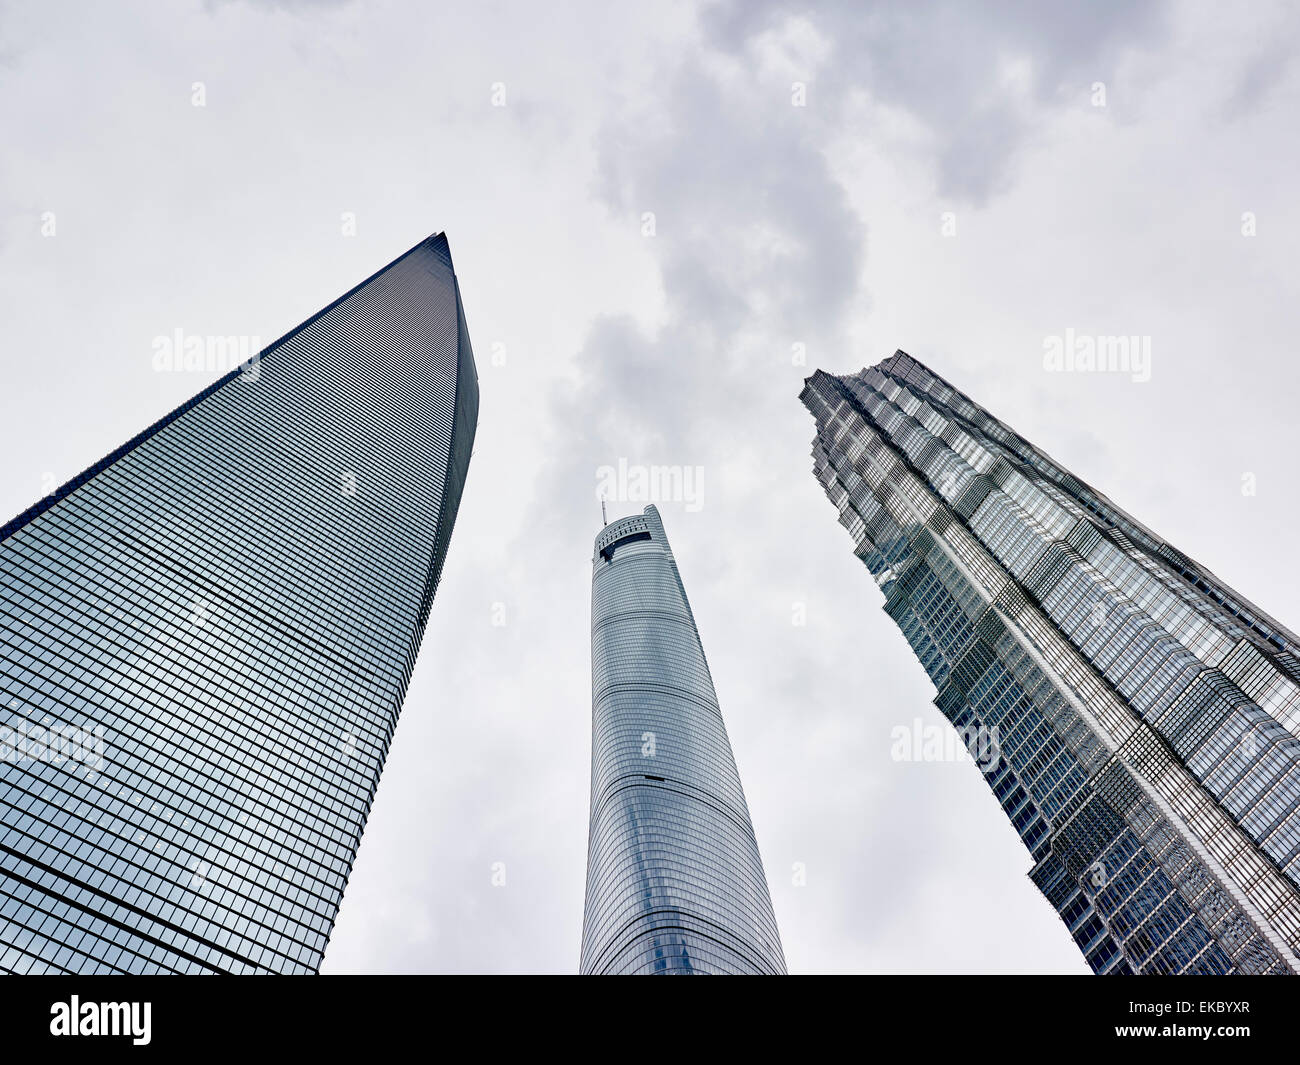 Shanghai World Trade Finance Centre, Shanghai Tower and Jin Mao Tower, Shanghai, China Stock Photo